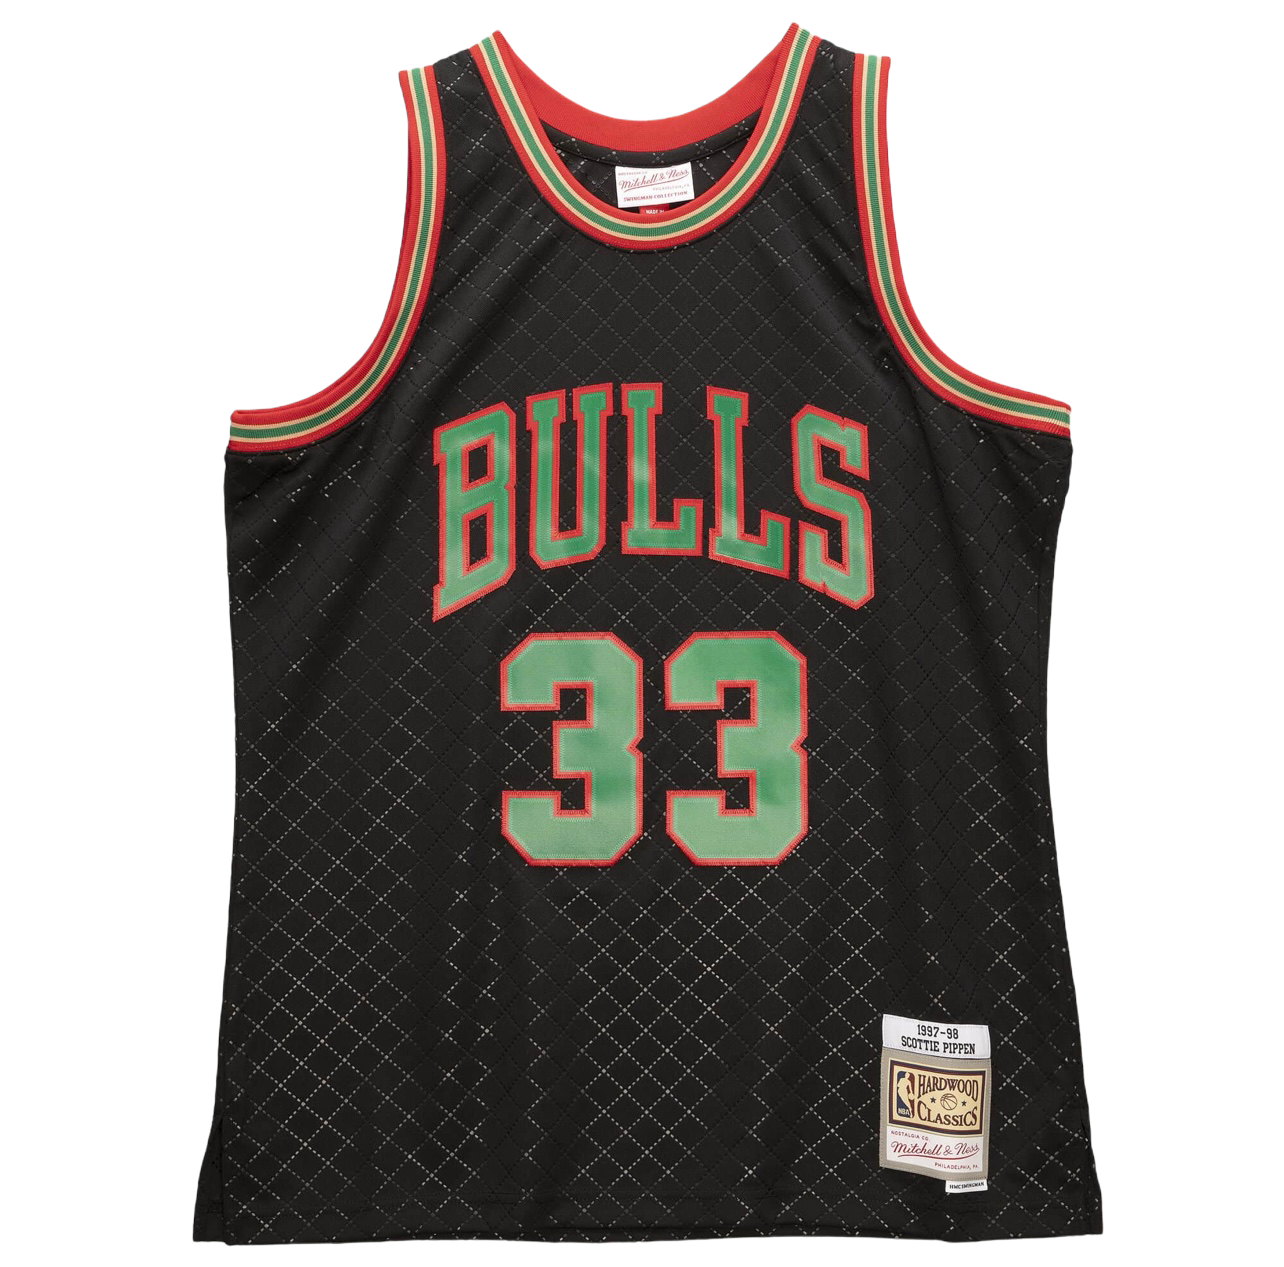 Chi. Bulls Neapolitan Pippen 97-98 Jersey